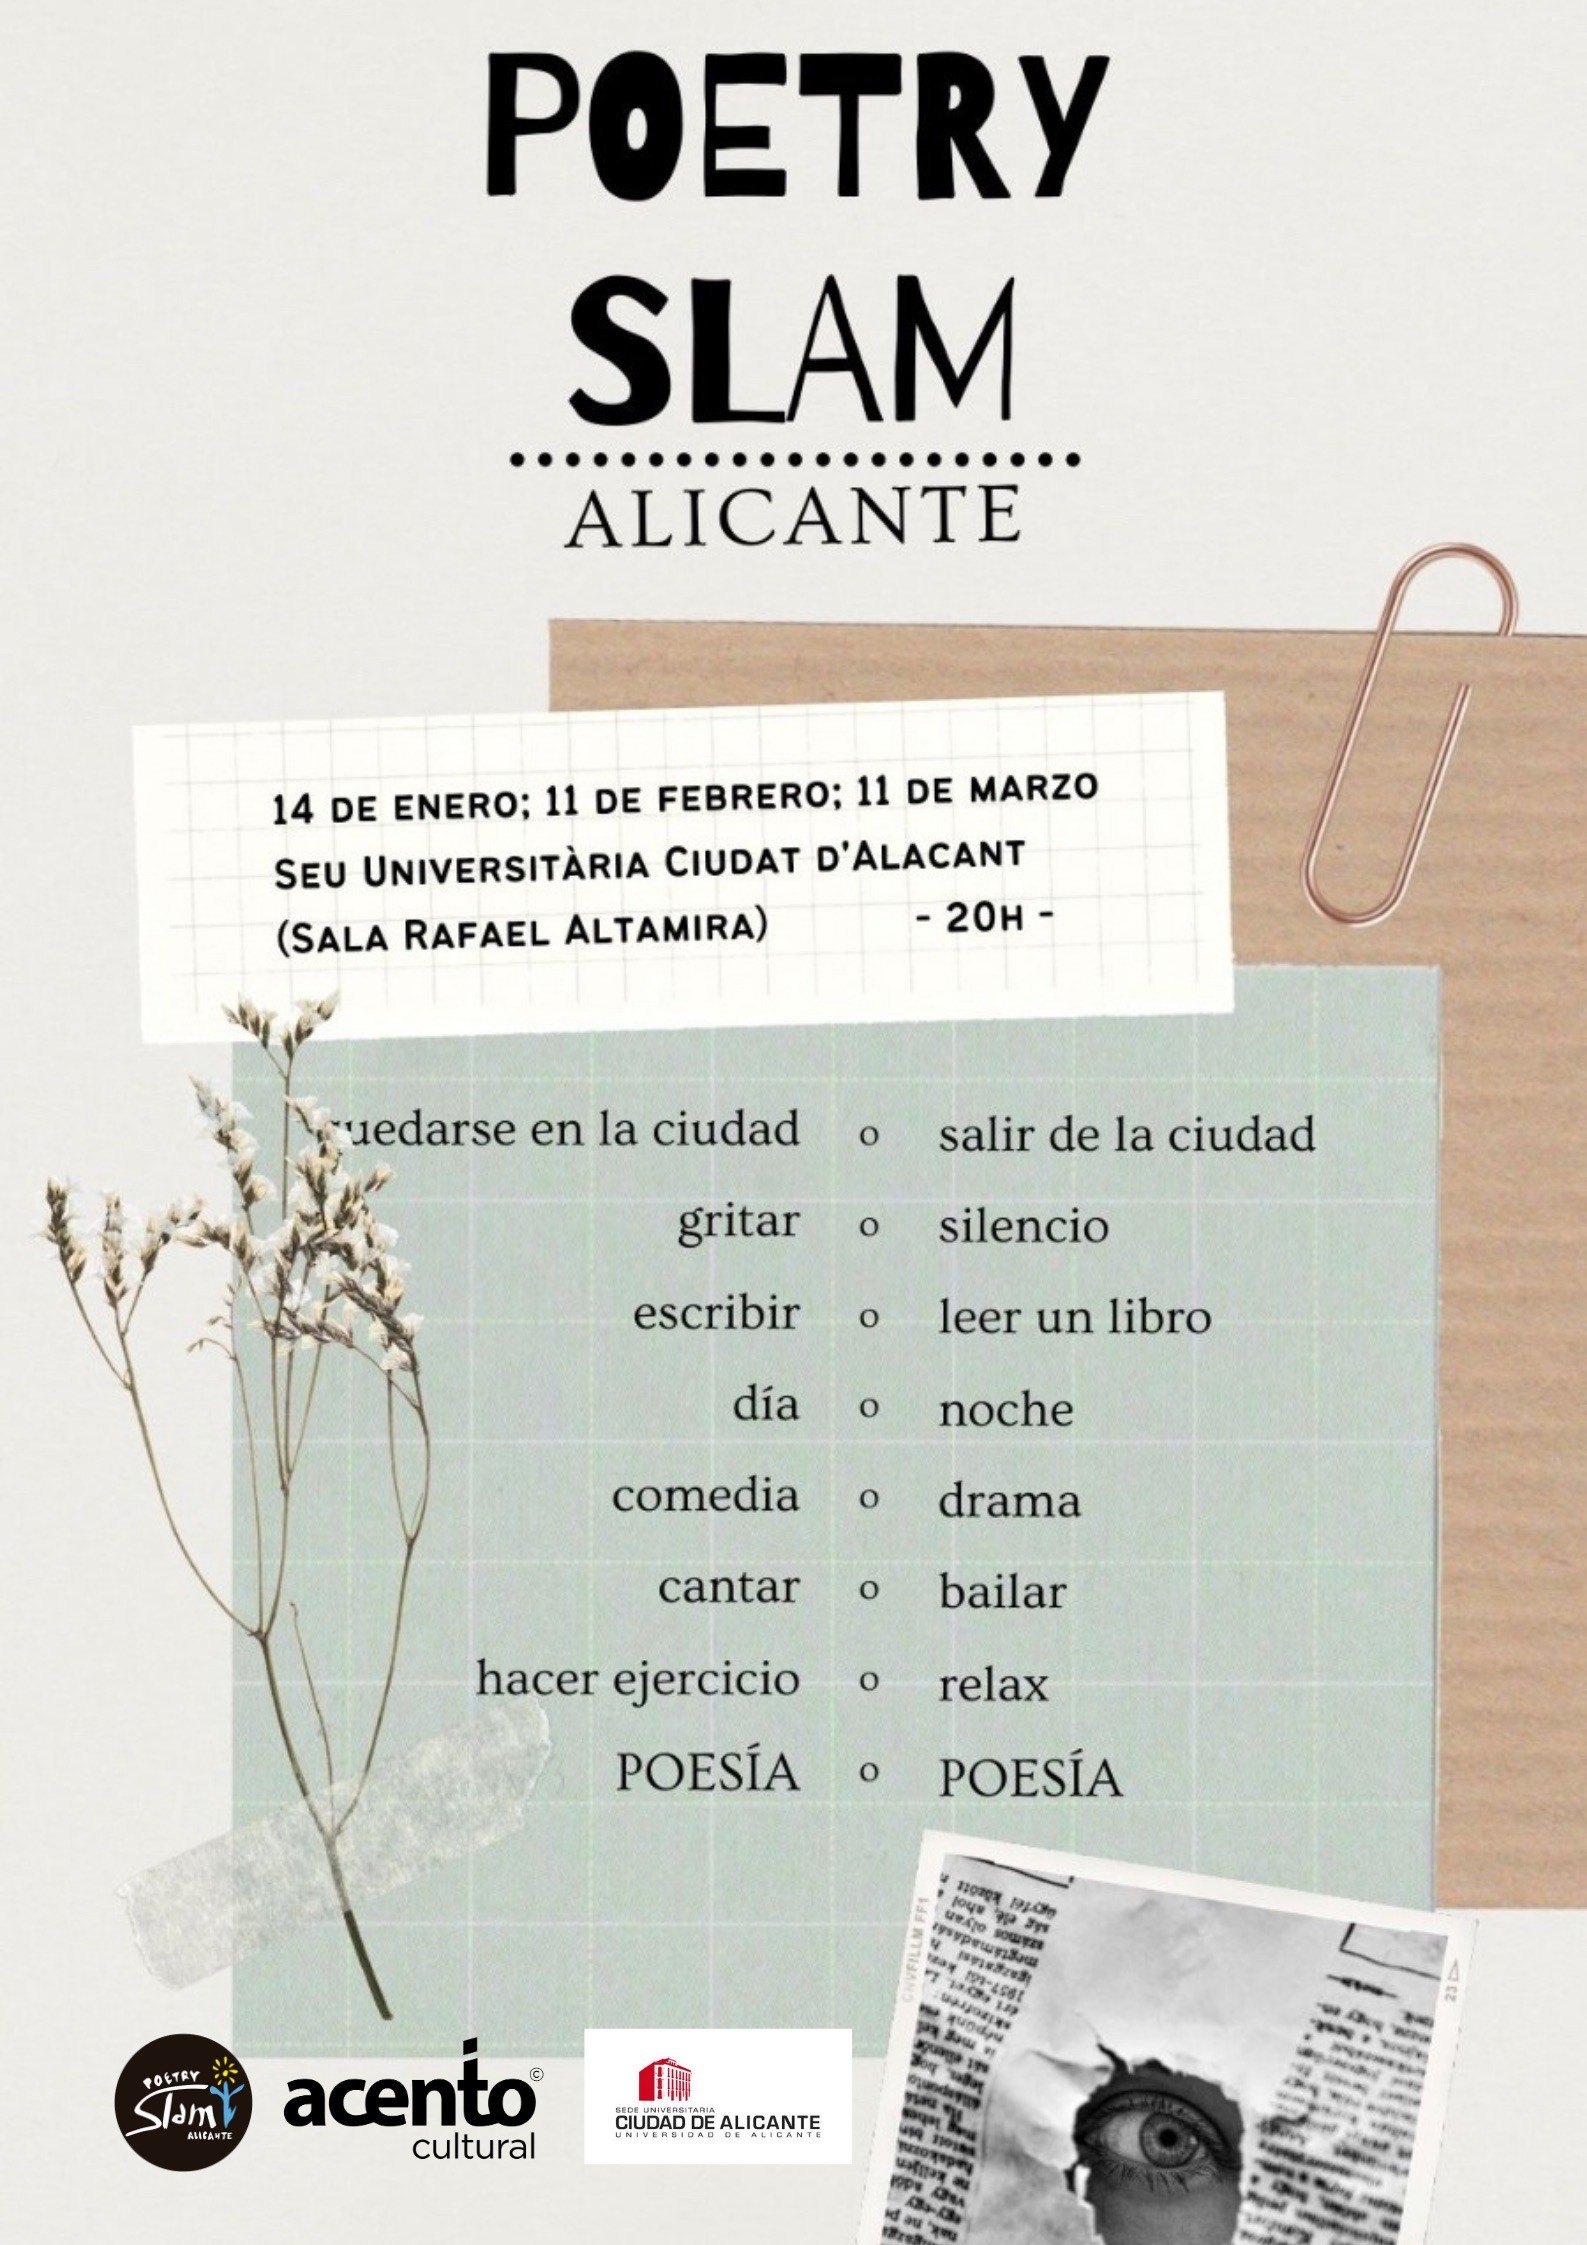 Poetry Slam Alicante